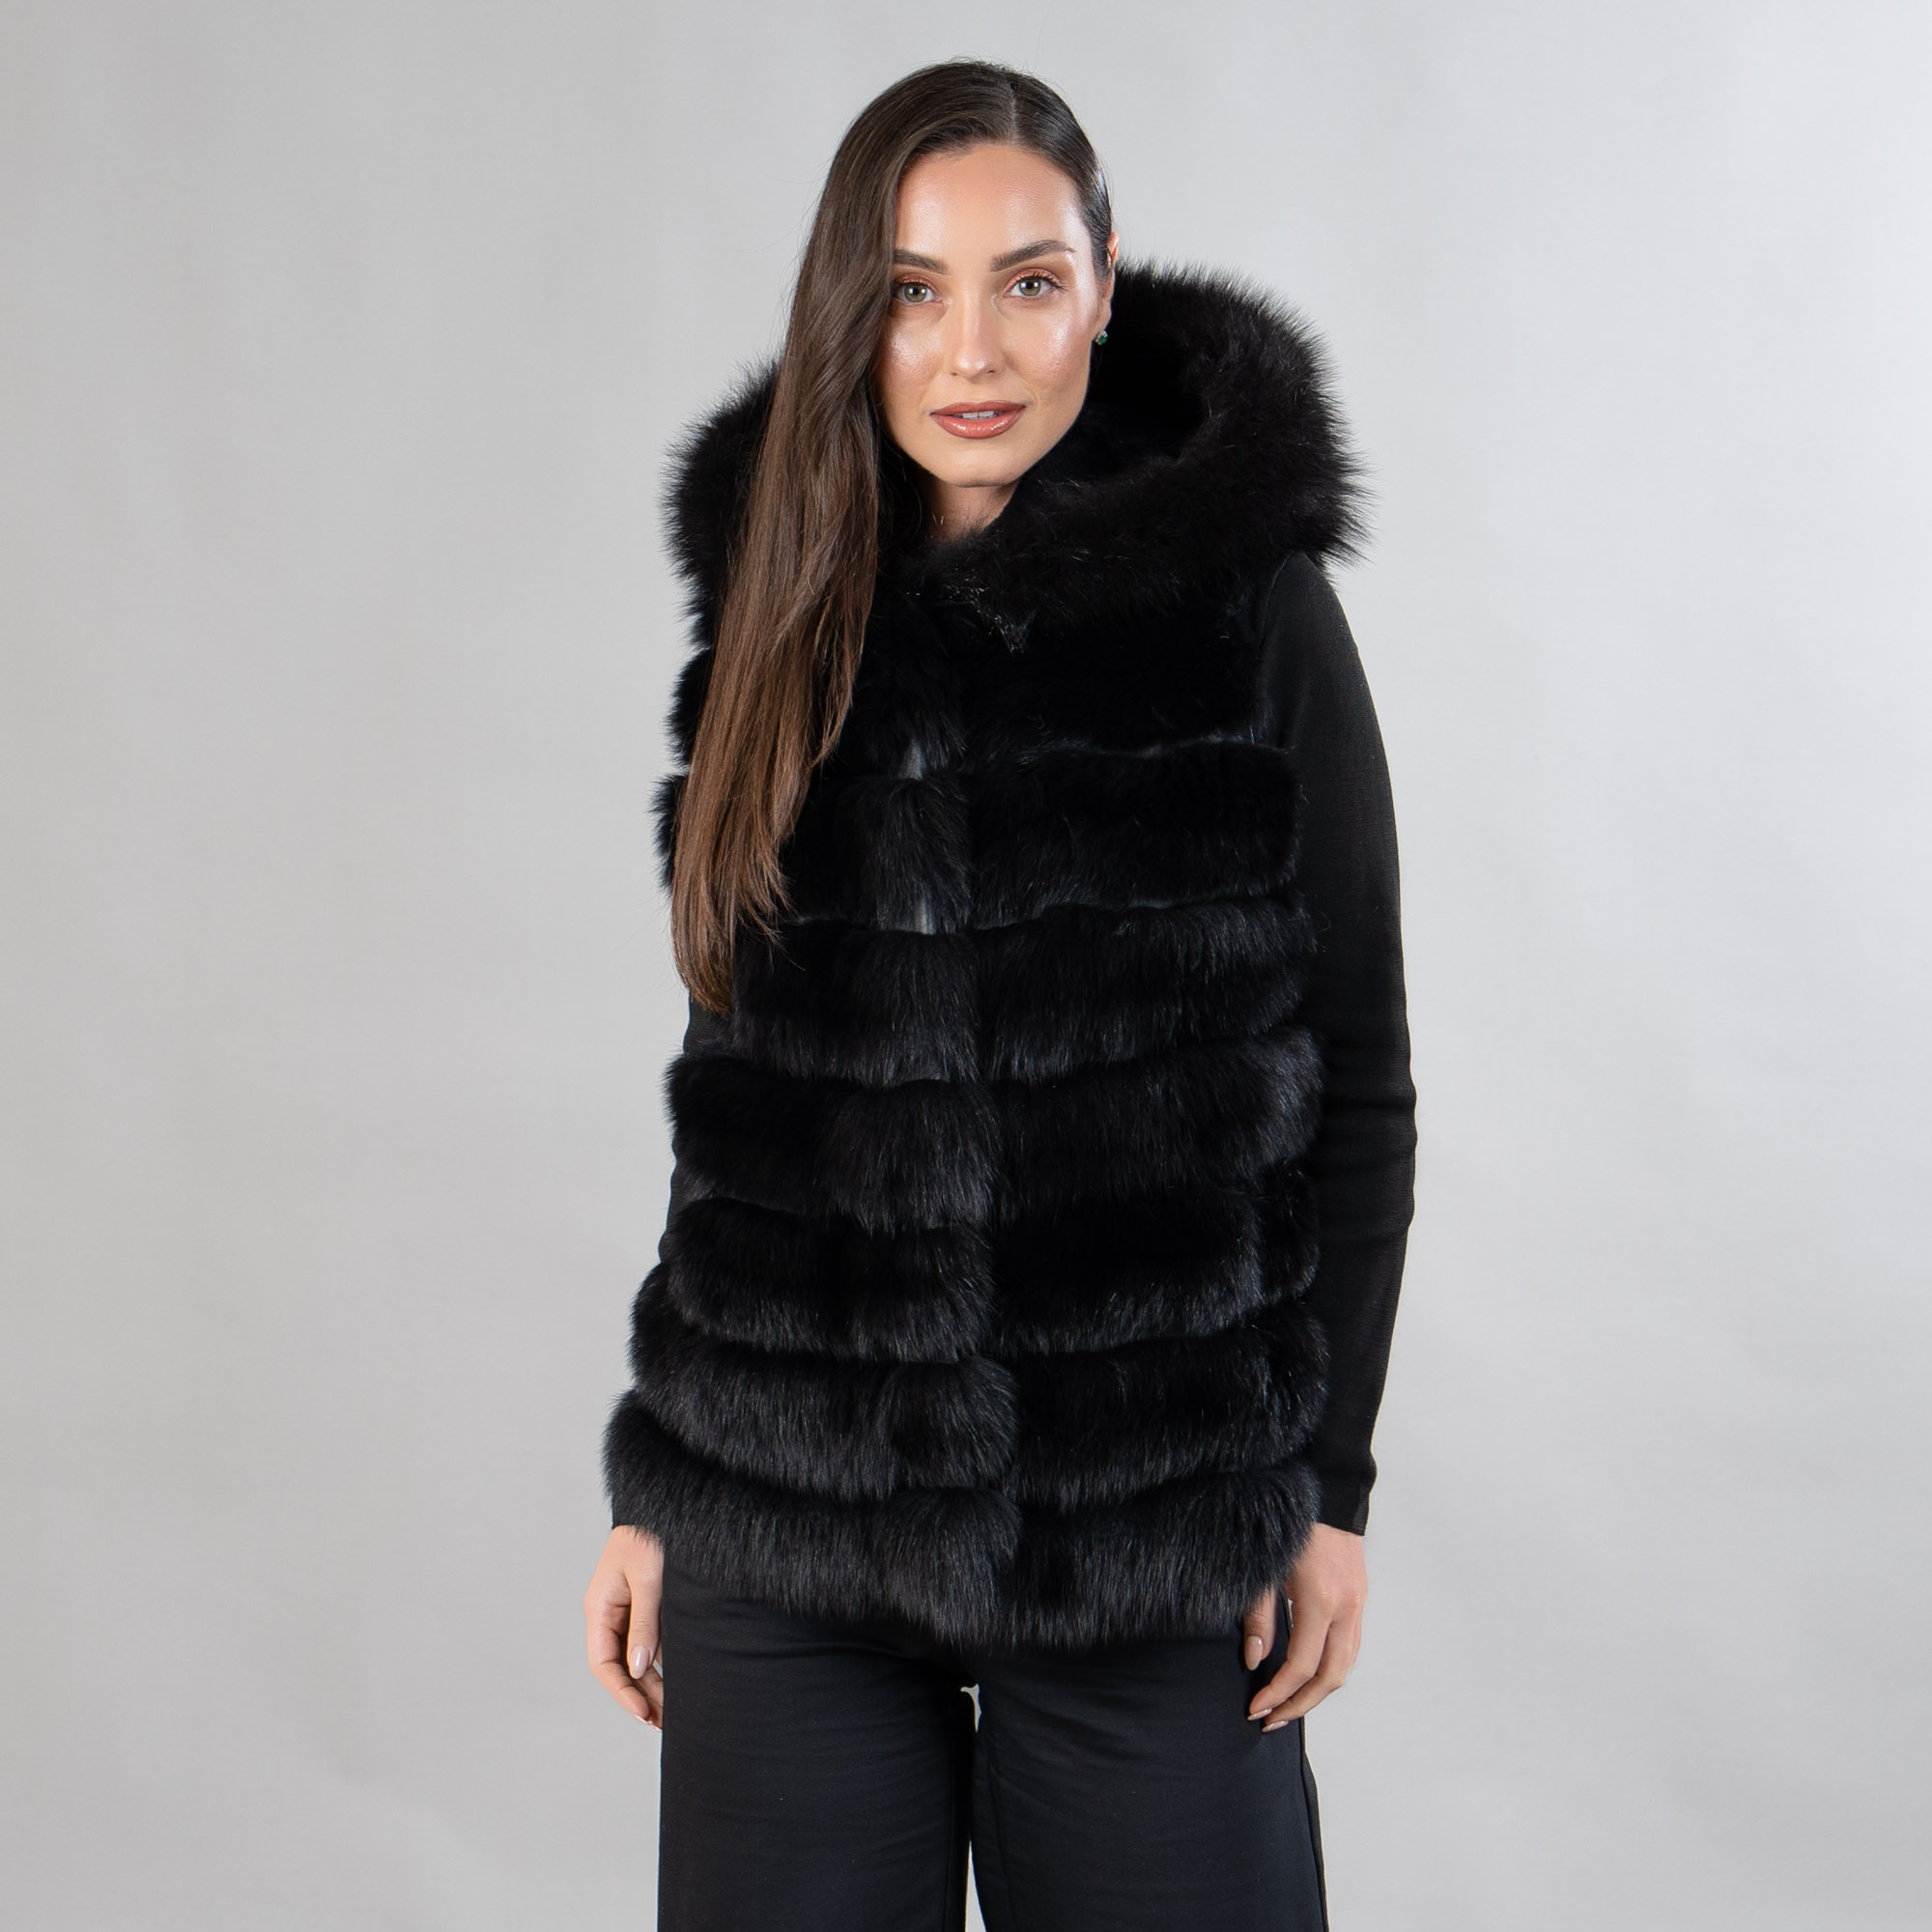 Fox fur polymorphic coat in black color